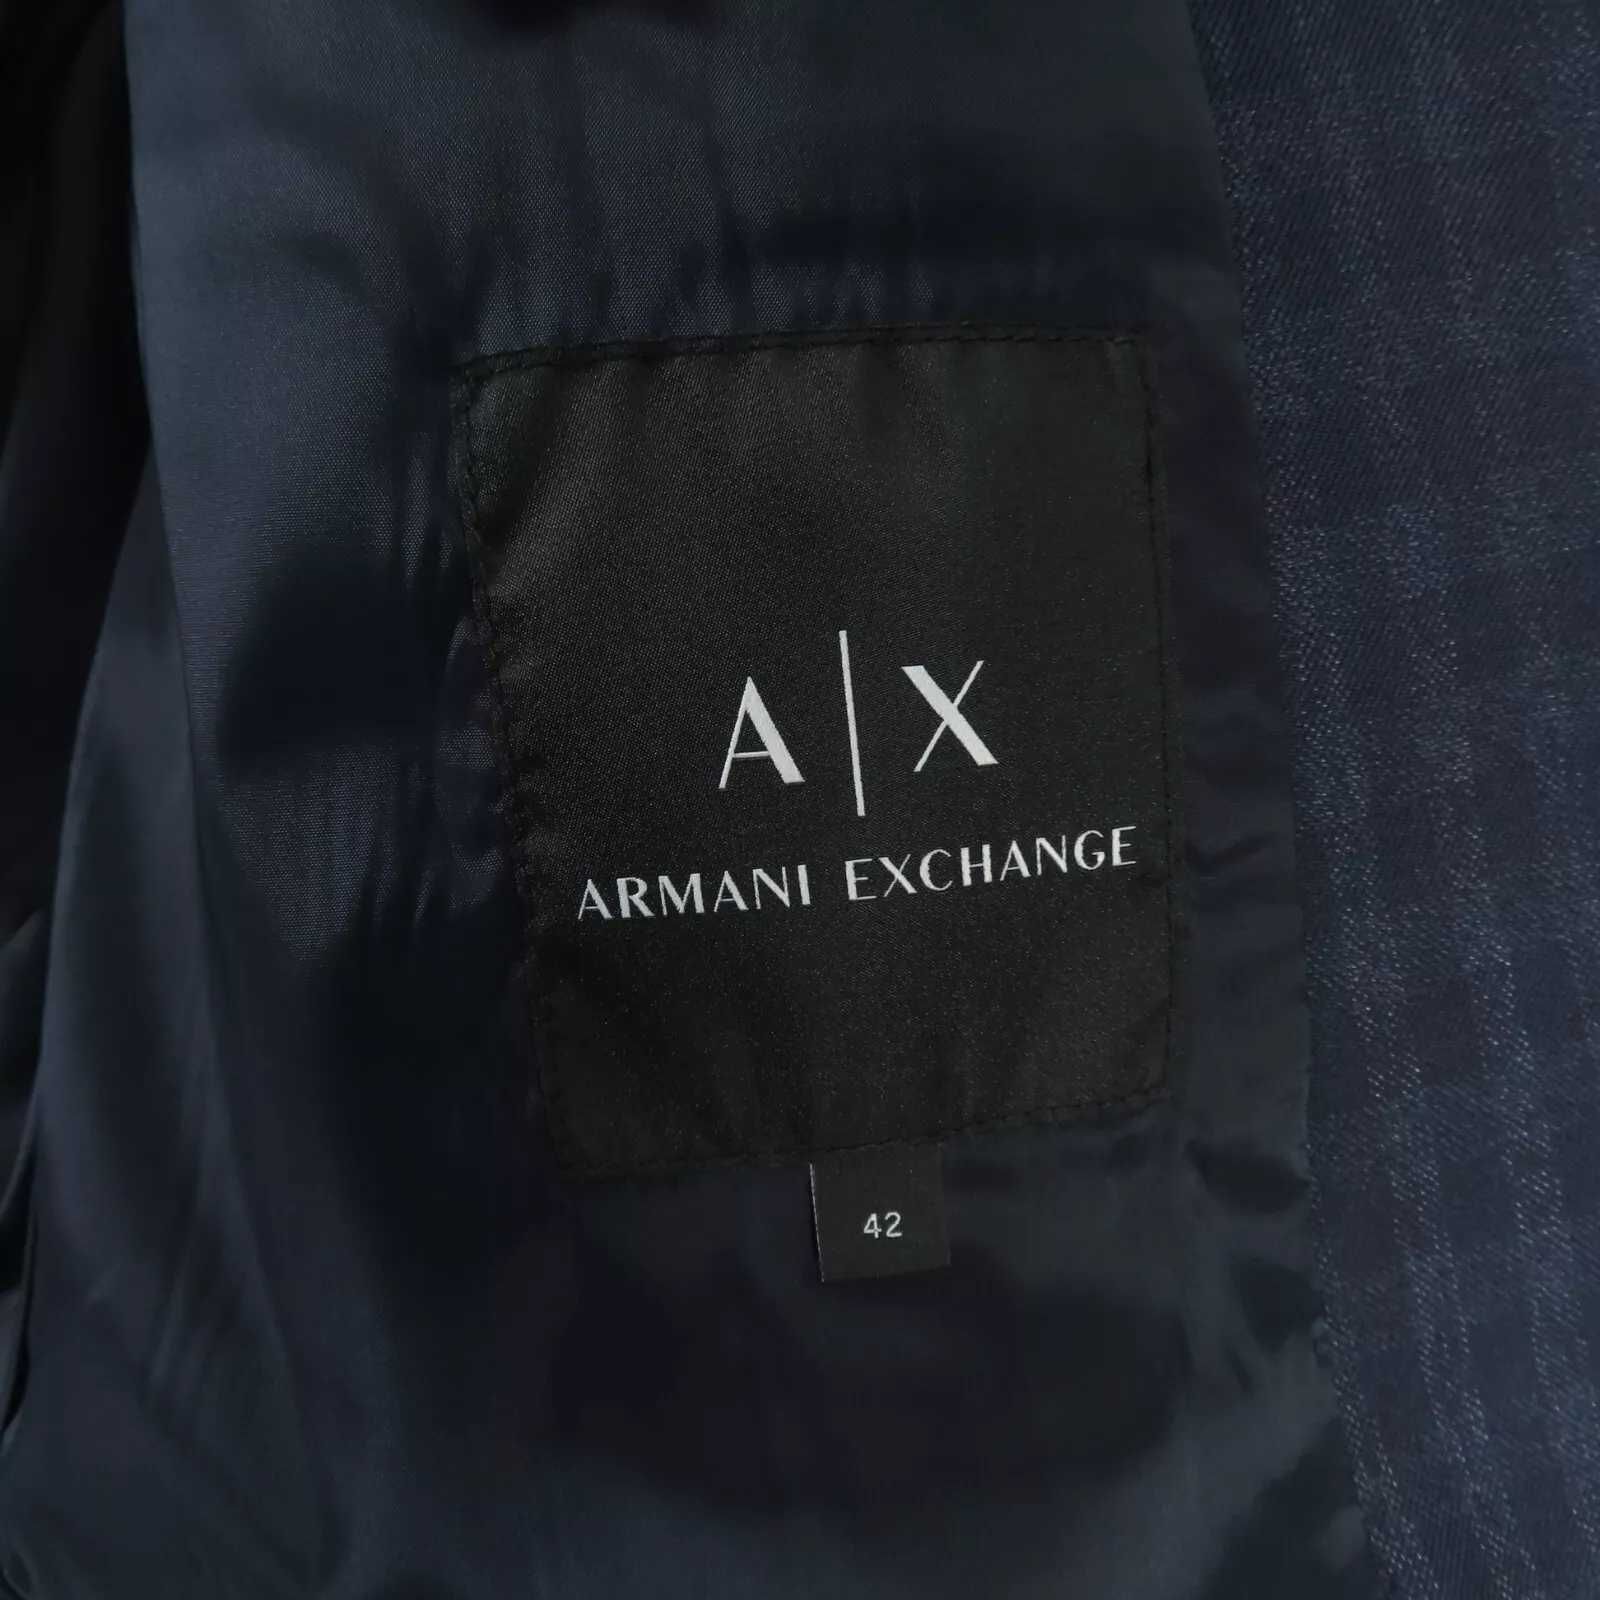 Armani Exchange AX Jacket Sport Coat Mens 42R Blue Check Two Button